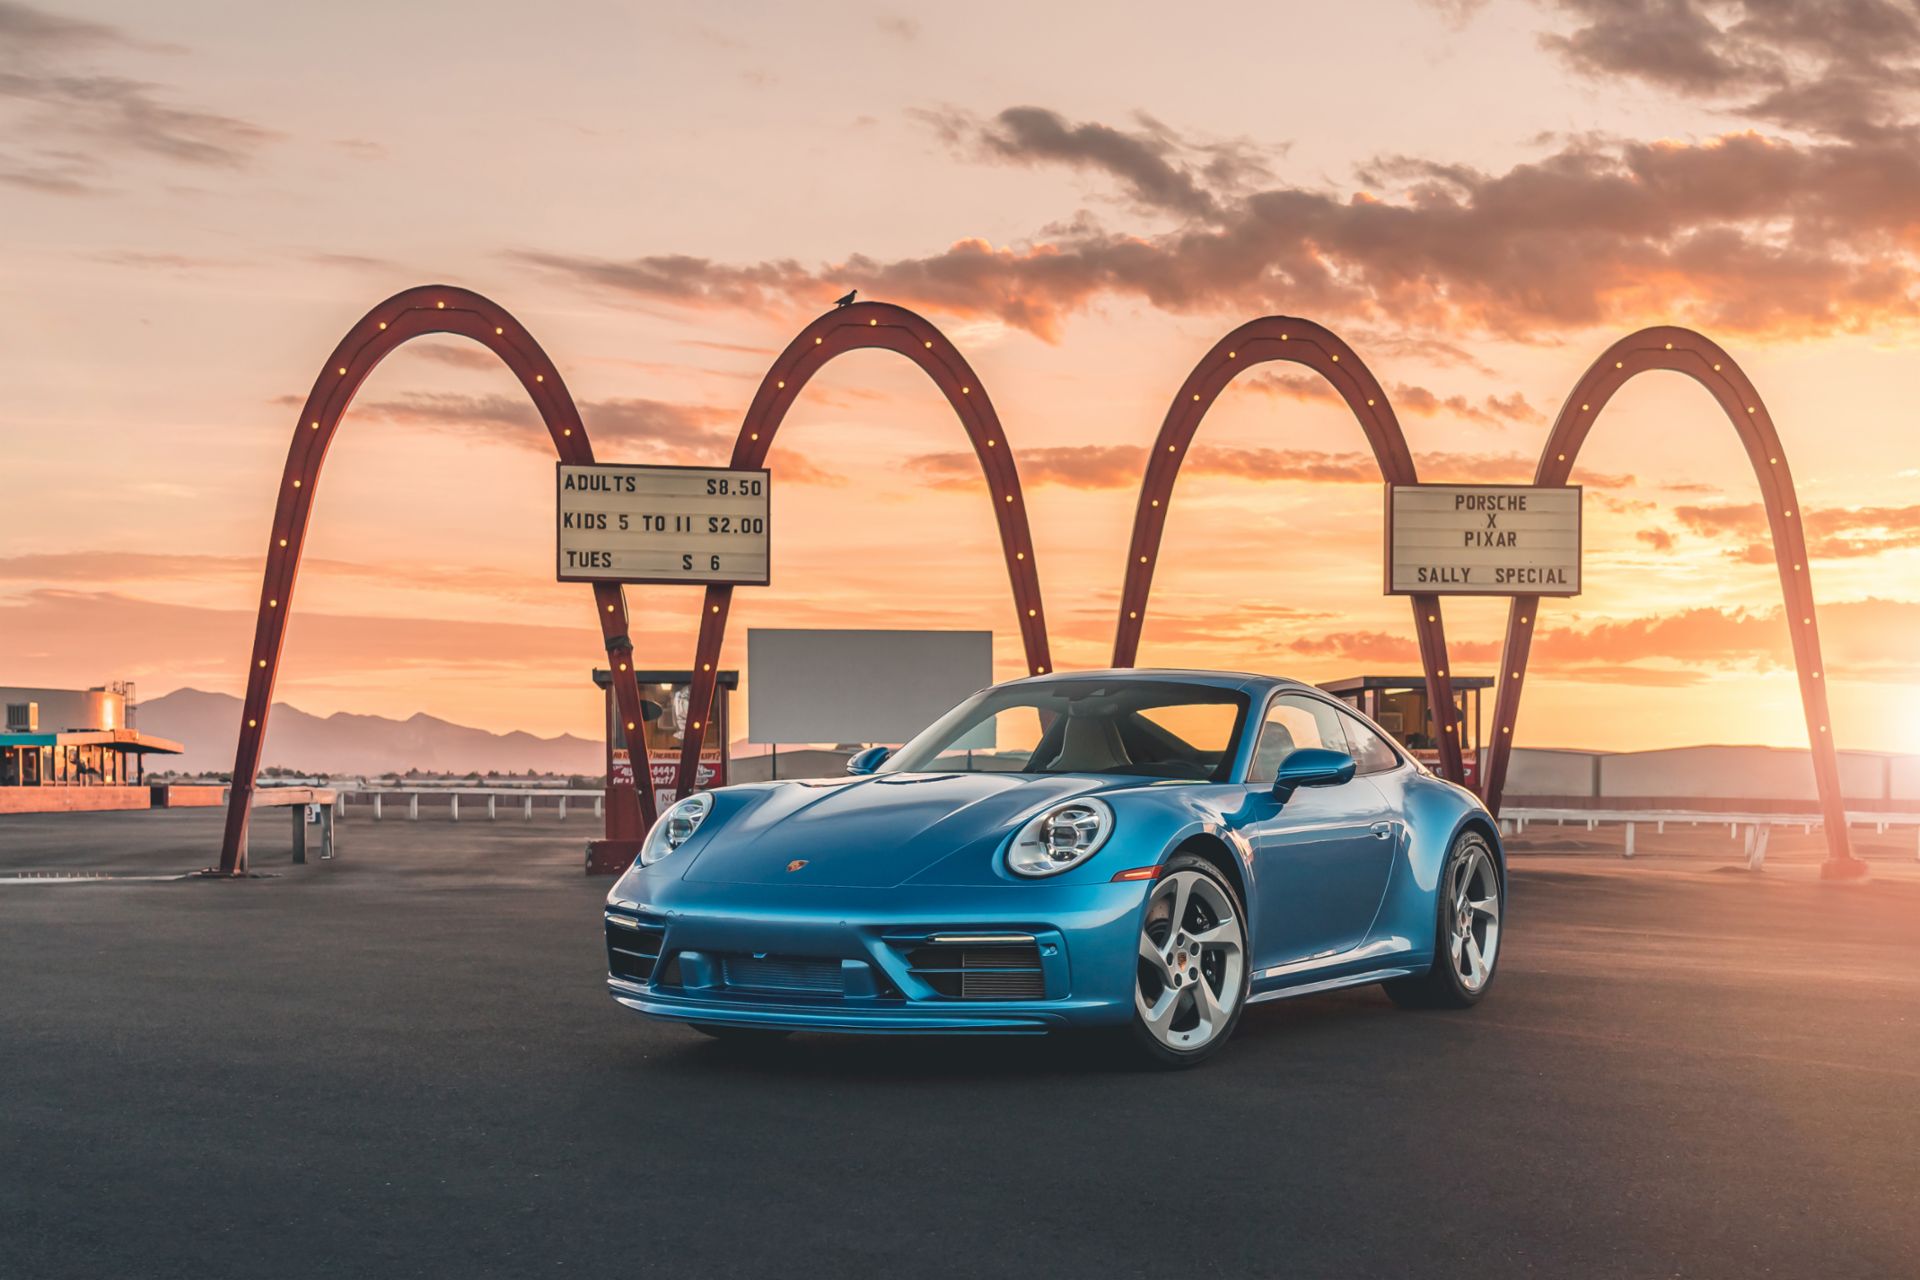 Blue Porsche 911 Sally Special at sunset in US desert